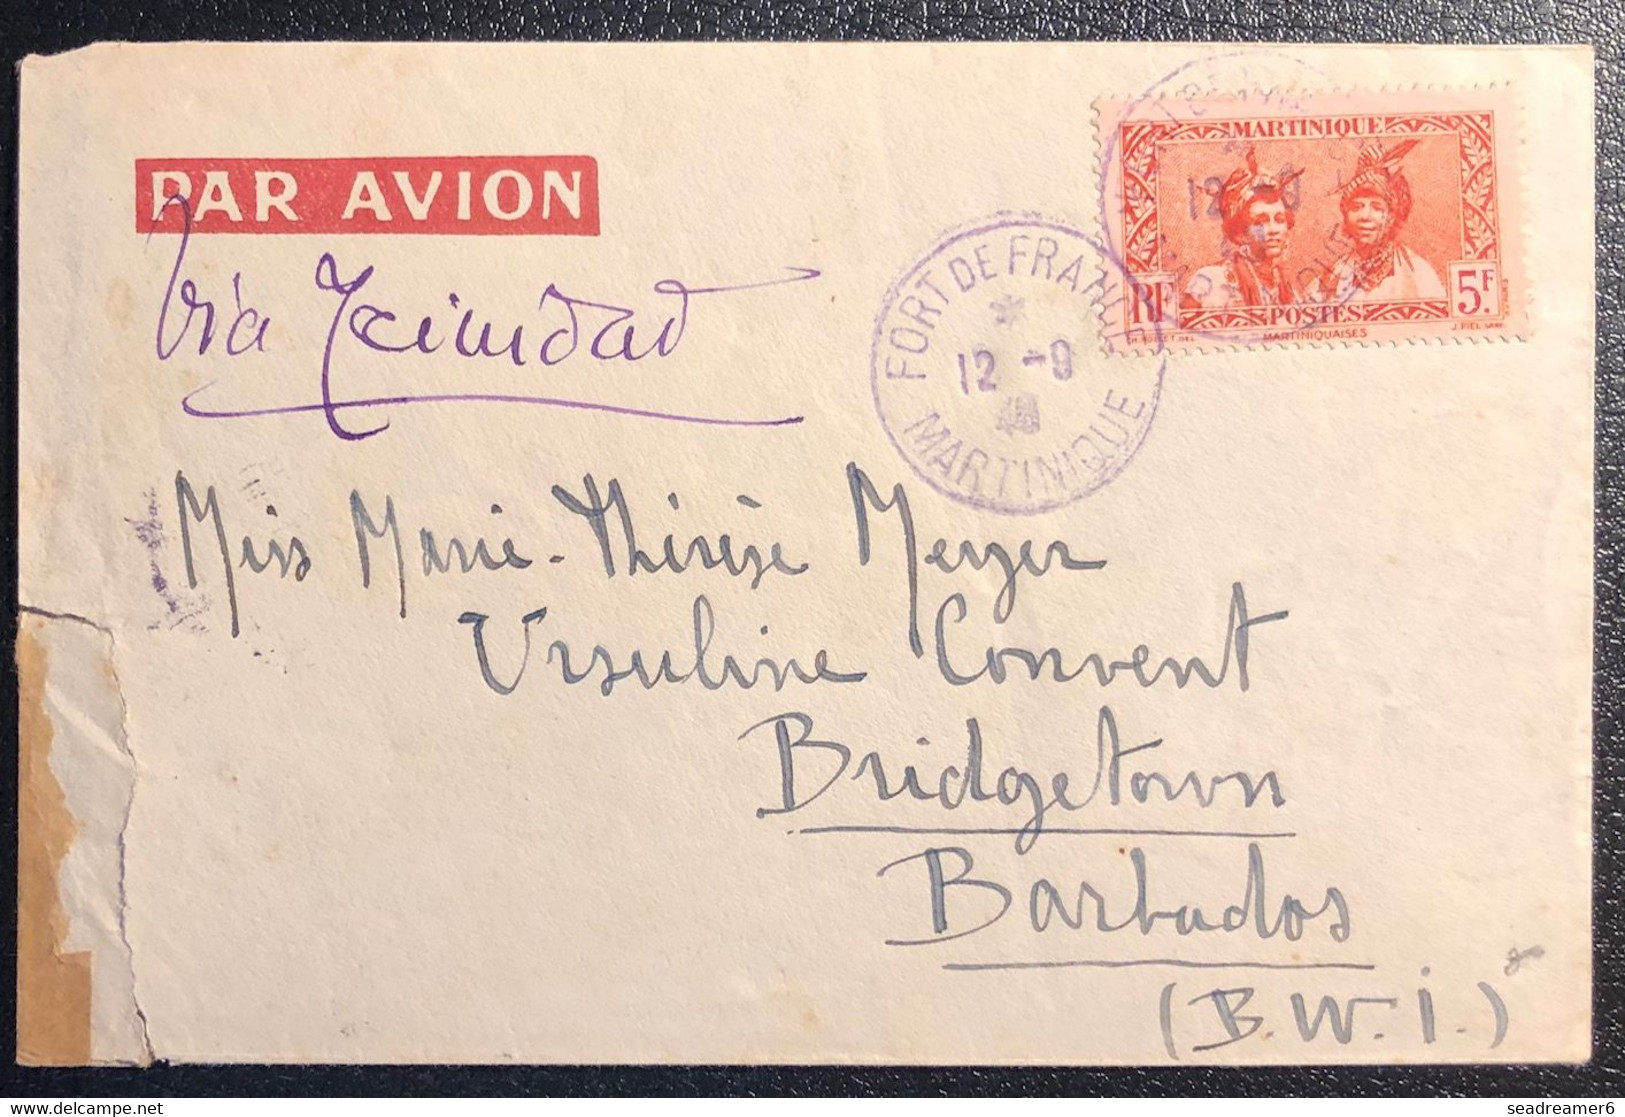 Martinique Lettre Tarif à 5FR 1940 N°152a Type II Obl Fort De France Violet Pour BARBADOS + 2 Censures TTB - Briefe U. Dokumente